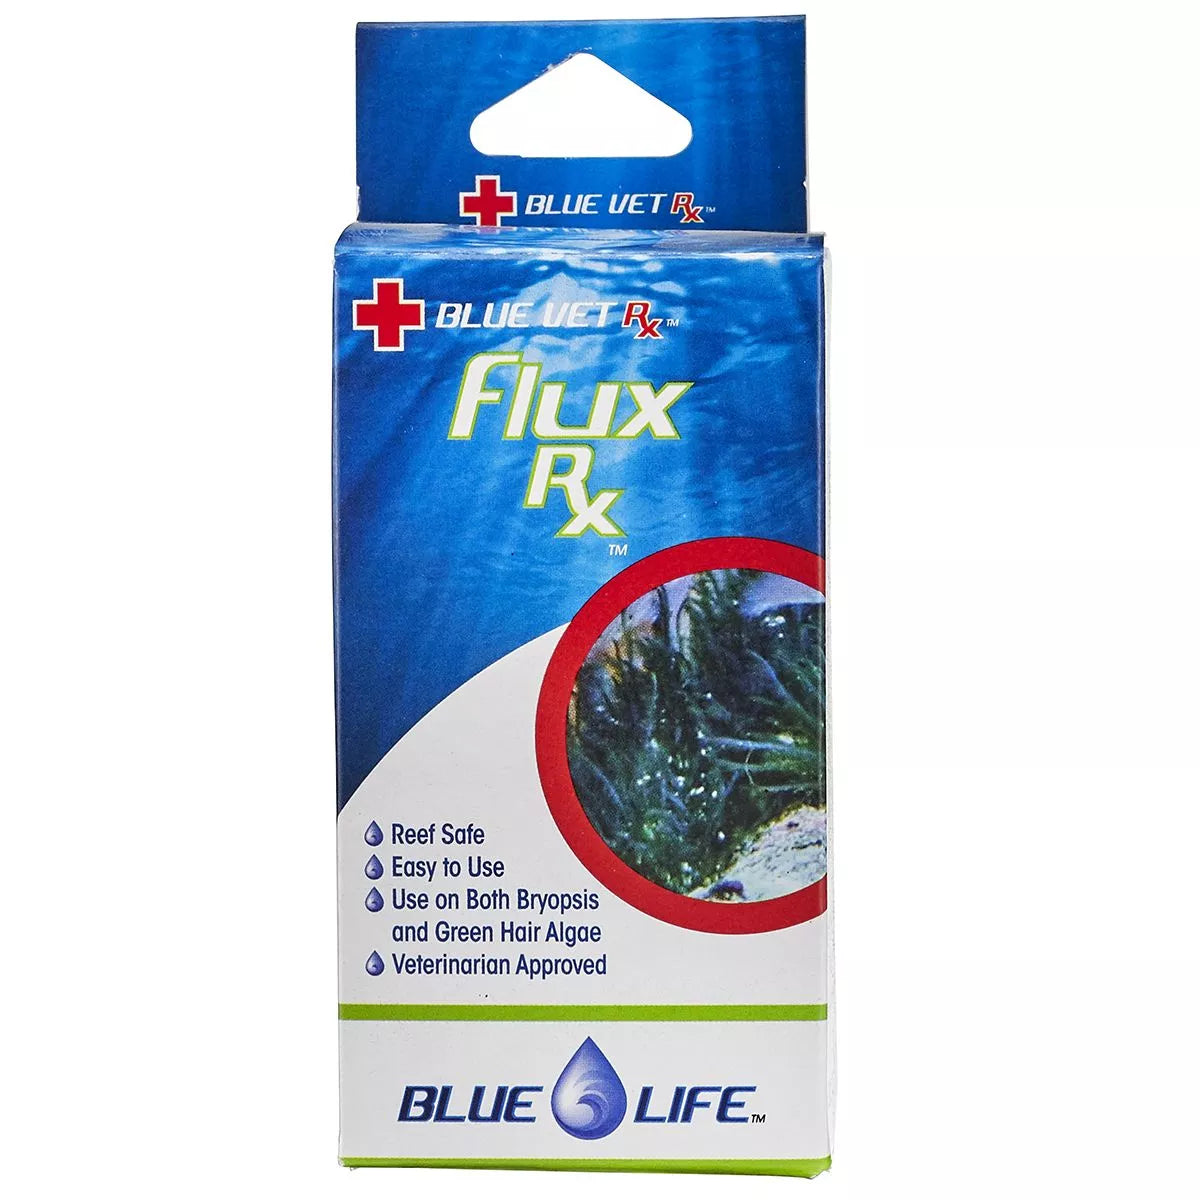 Flux Rx (Fluconazole) Aquarium Treatment  - Blue Life - Blue Life USA